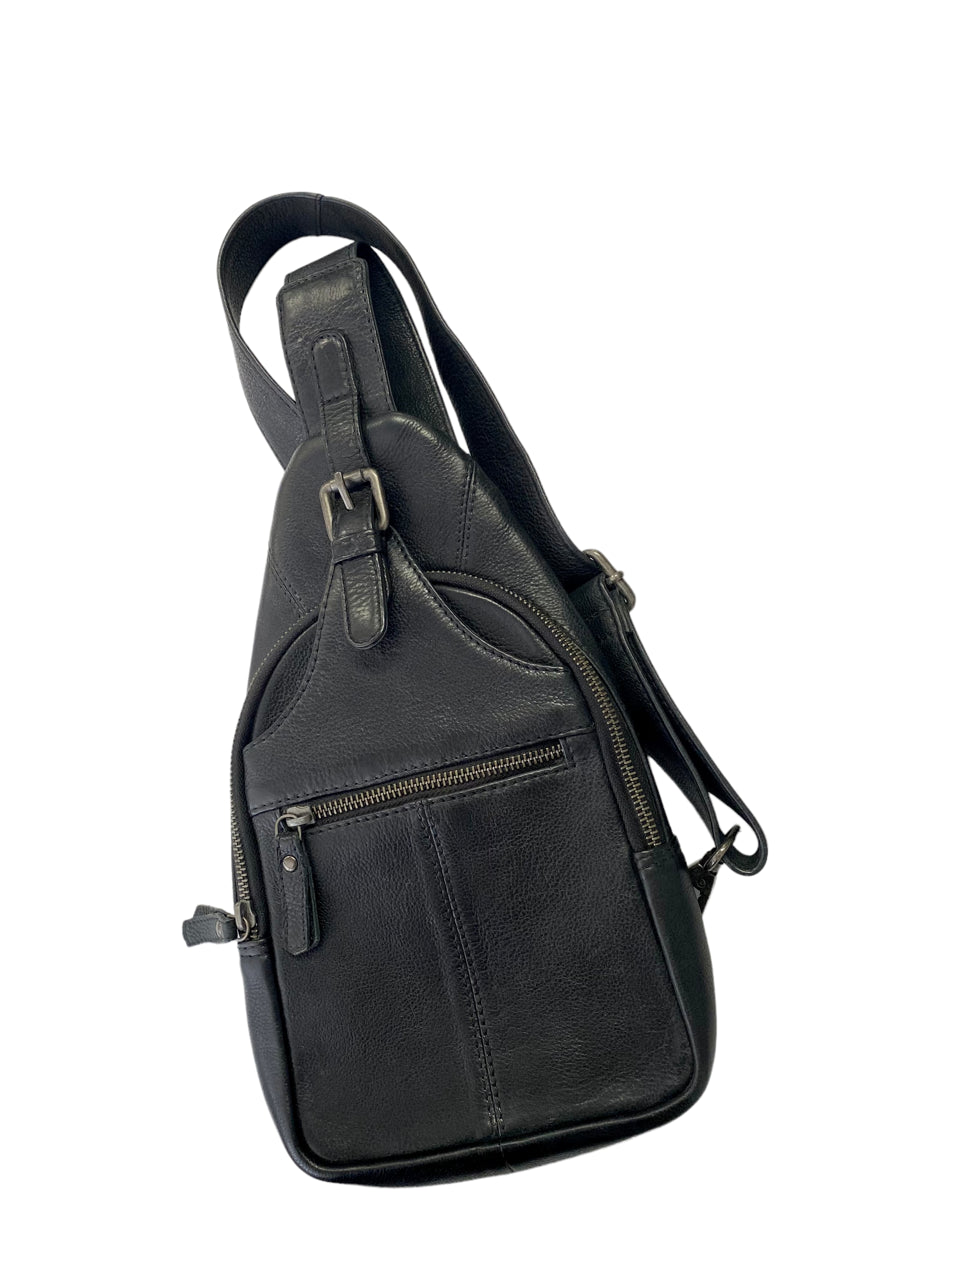 Oran - RH-4605 Mika Leather Sling chest bag - Black-1